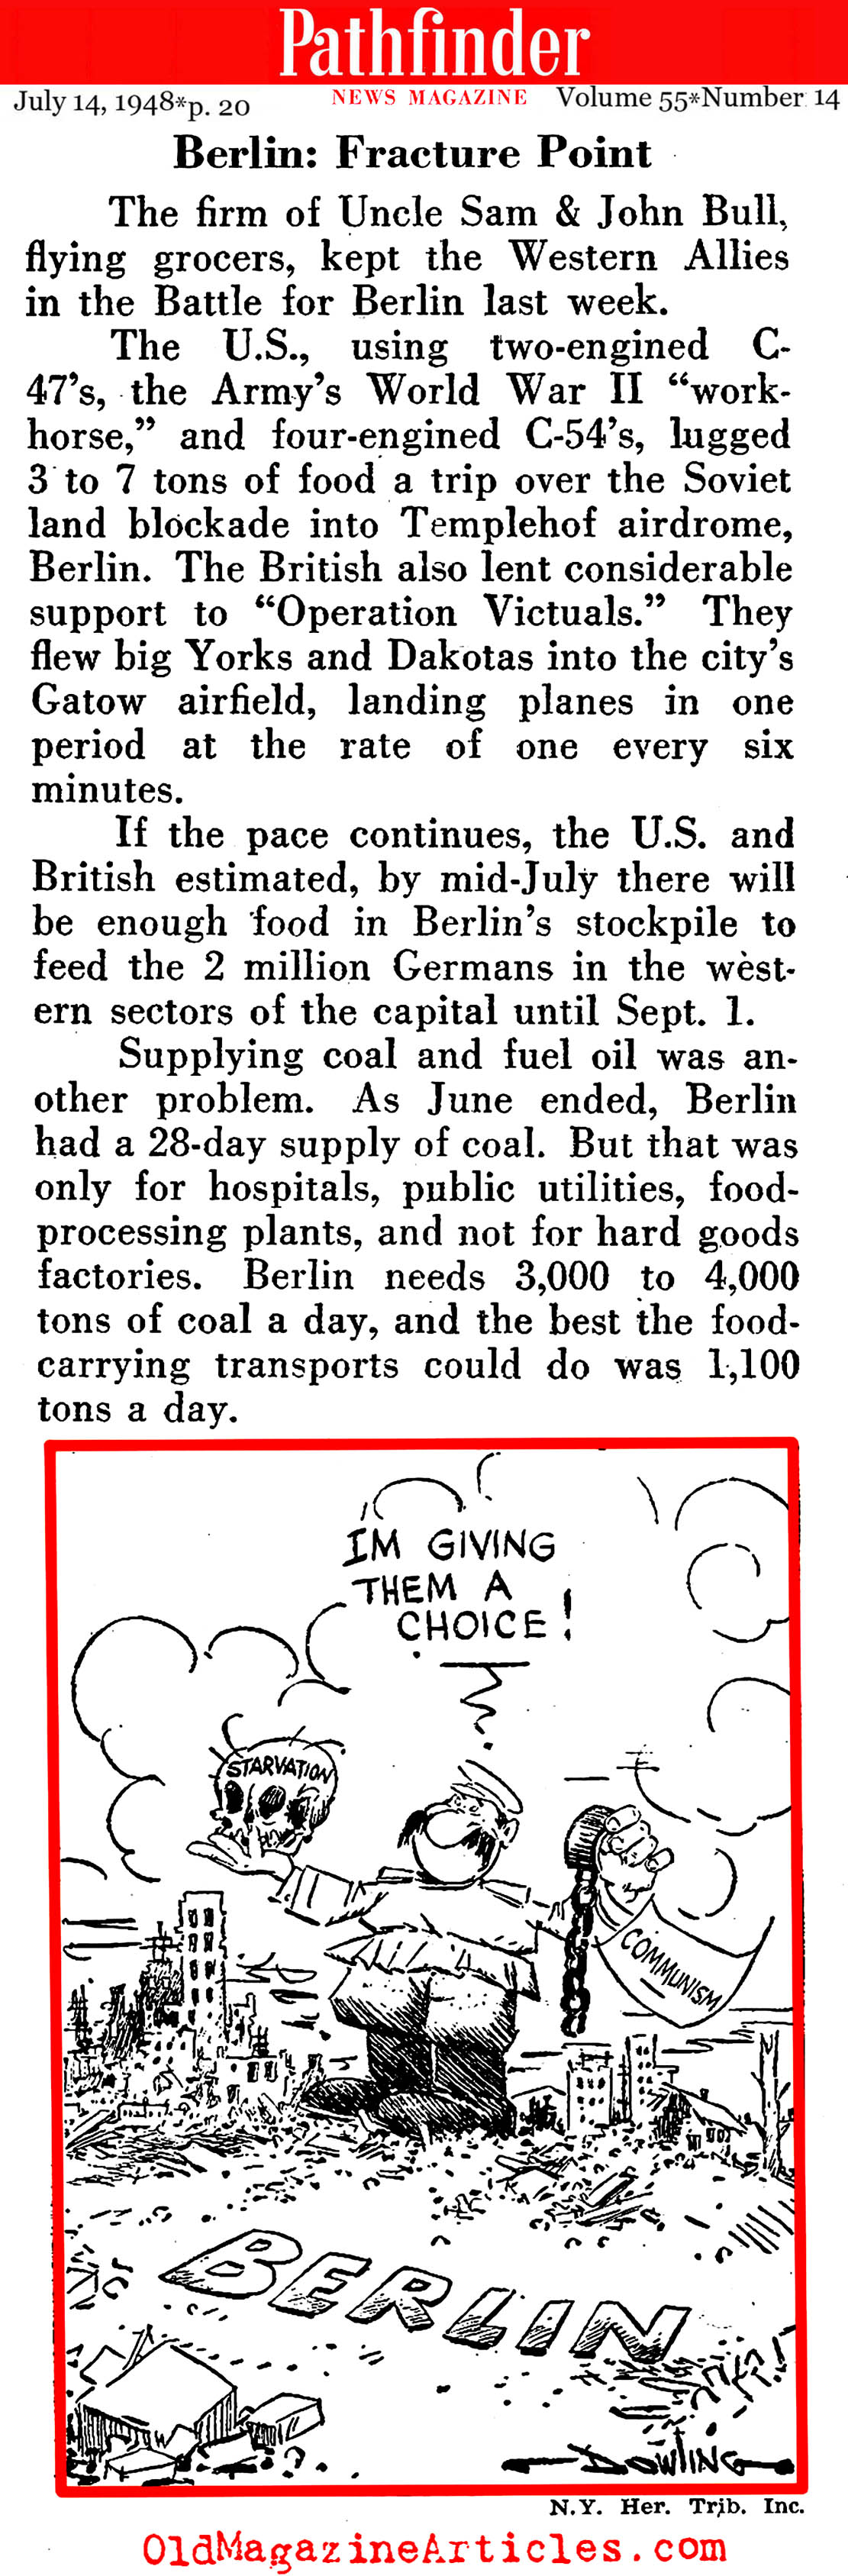 One Month Into the Berlin Blockade (Pathfinder Magazine, 1948)